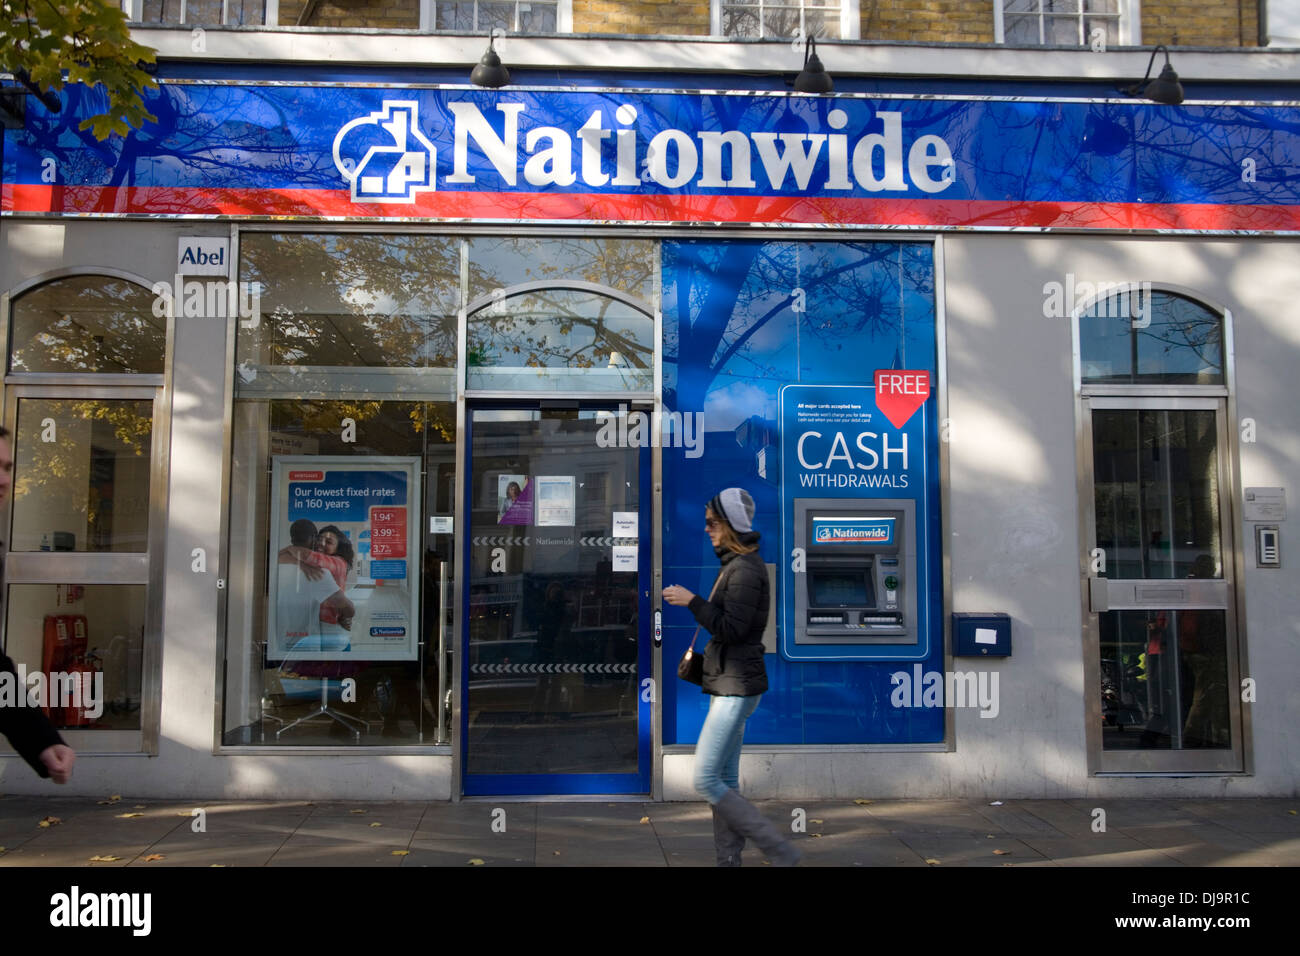 Nationwide shop front, Upper Street, Islington Stock Photo